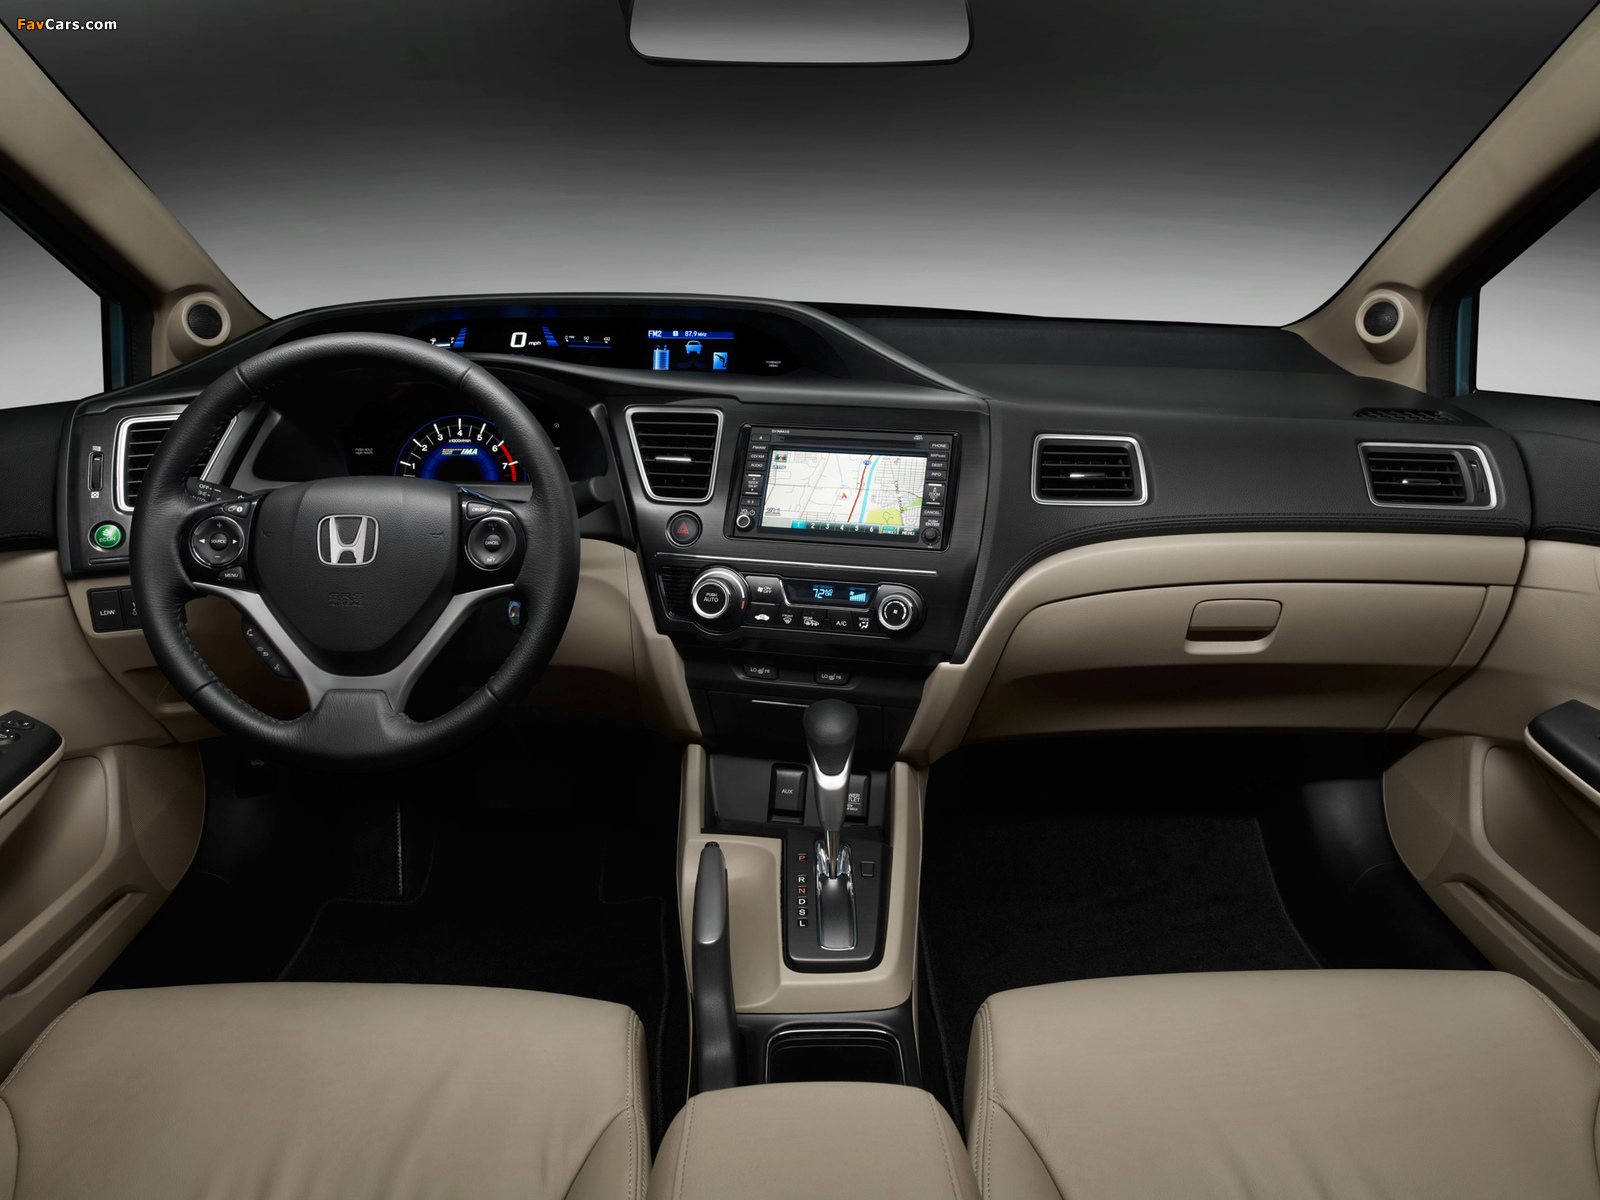 Honda Civic Hybrid 2013 pictures (1600 x 1200)